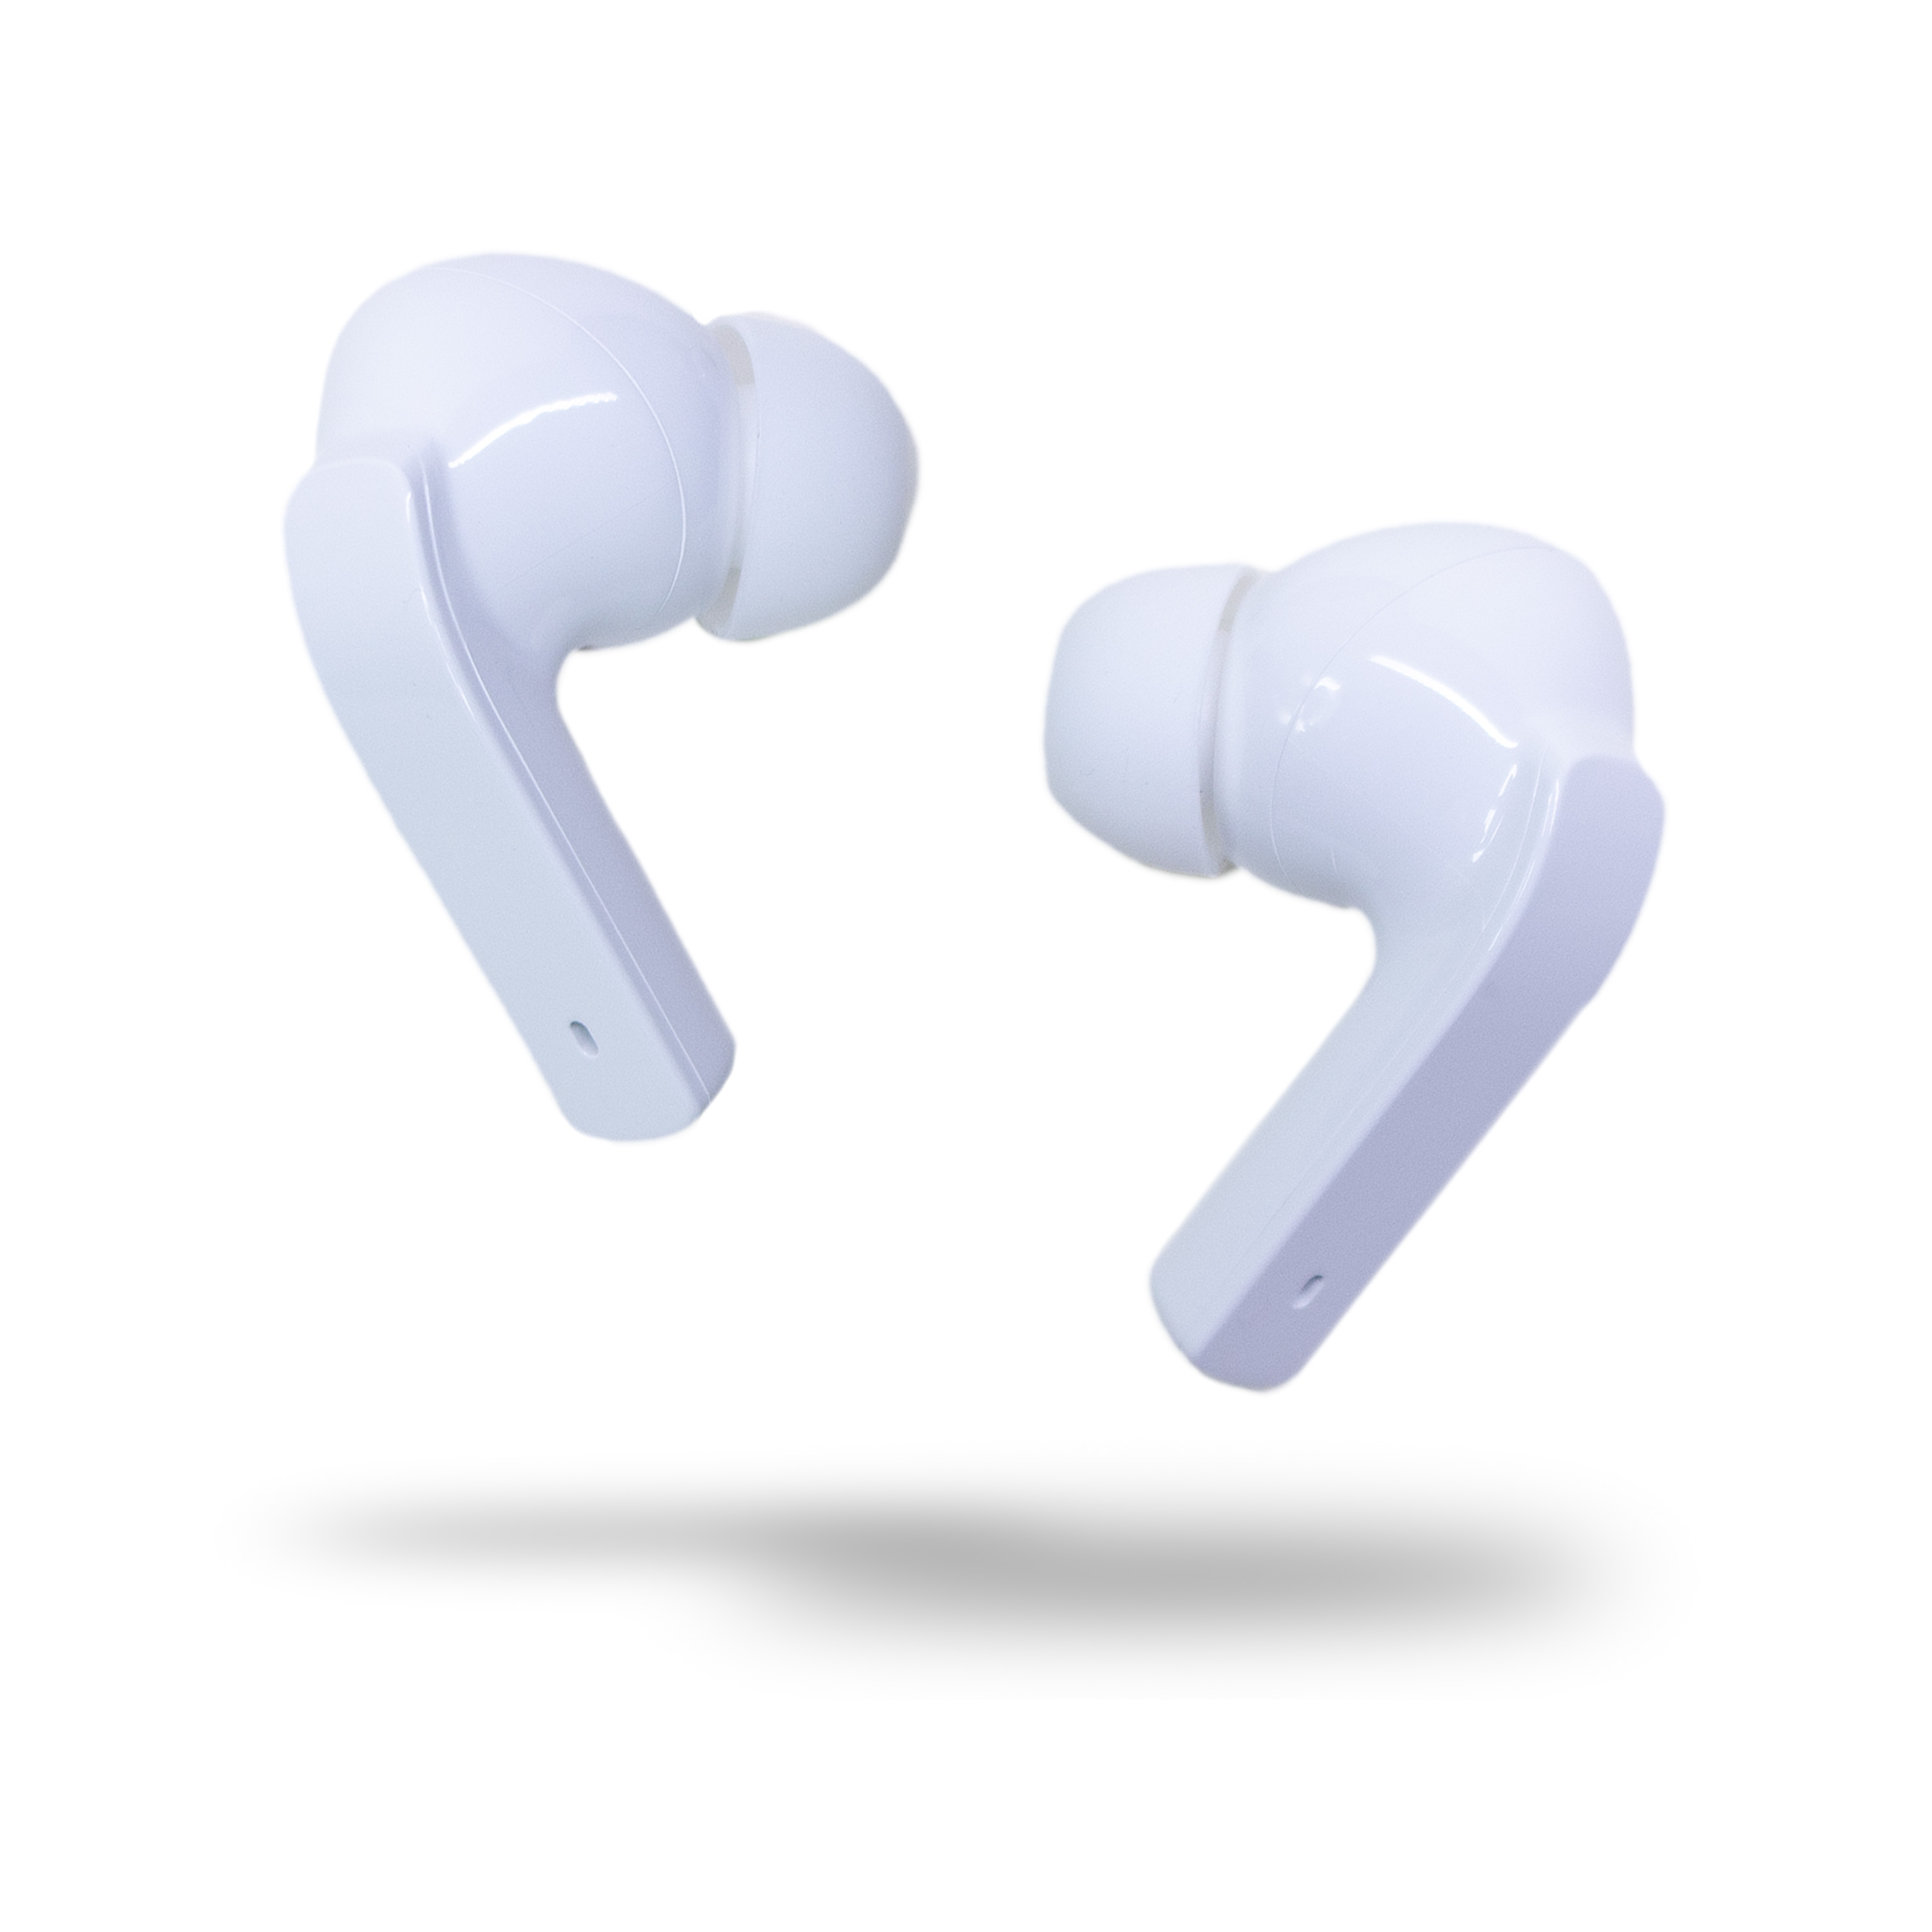 BLAUPUNKT TWS 30, In-ear Kopfhörer Bluetooth weiß